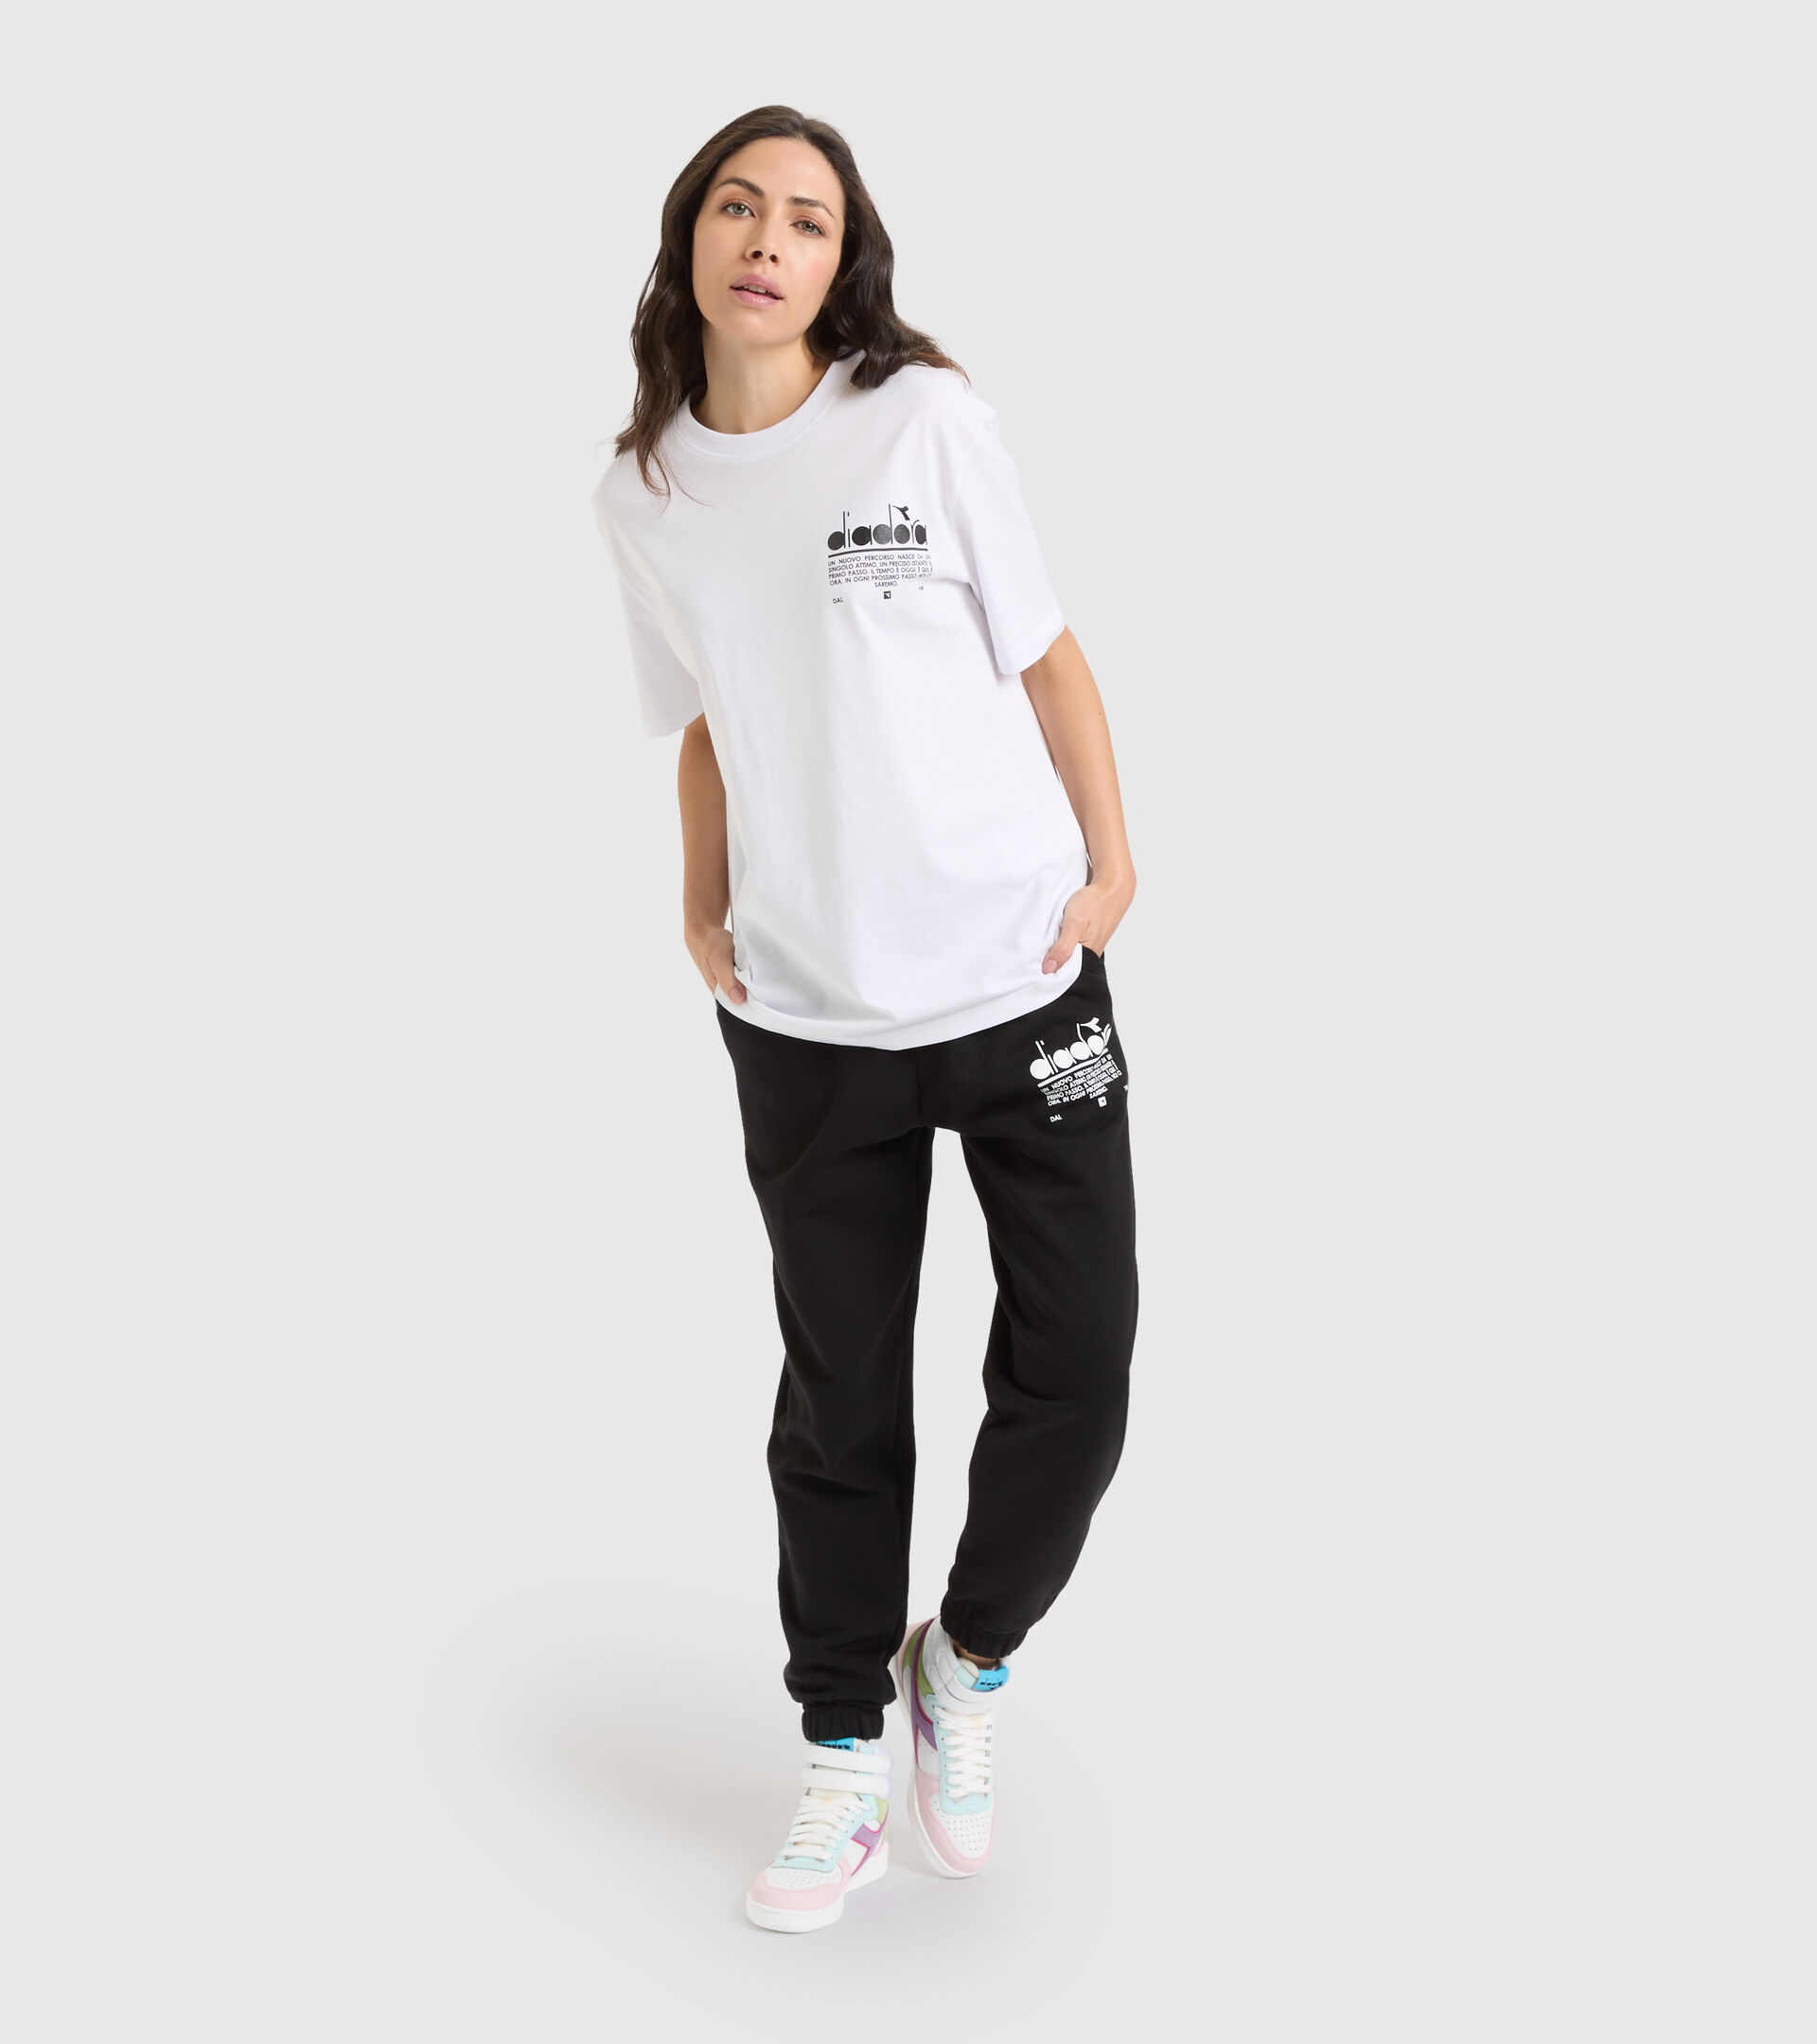 Camiseta de algodón organico - Unisex T-SHIRT SS MANIFESTO BLANCO VIVO - Diadora